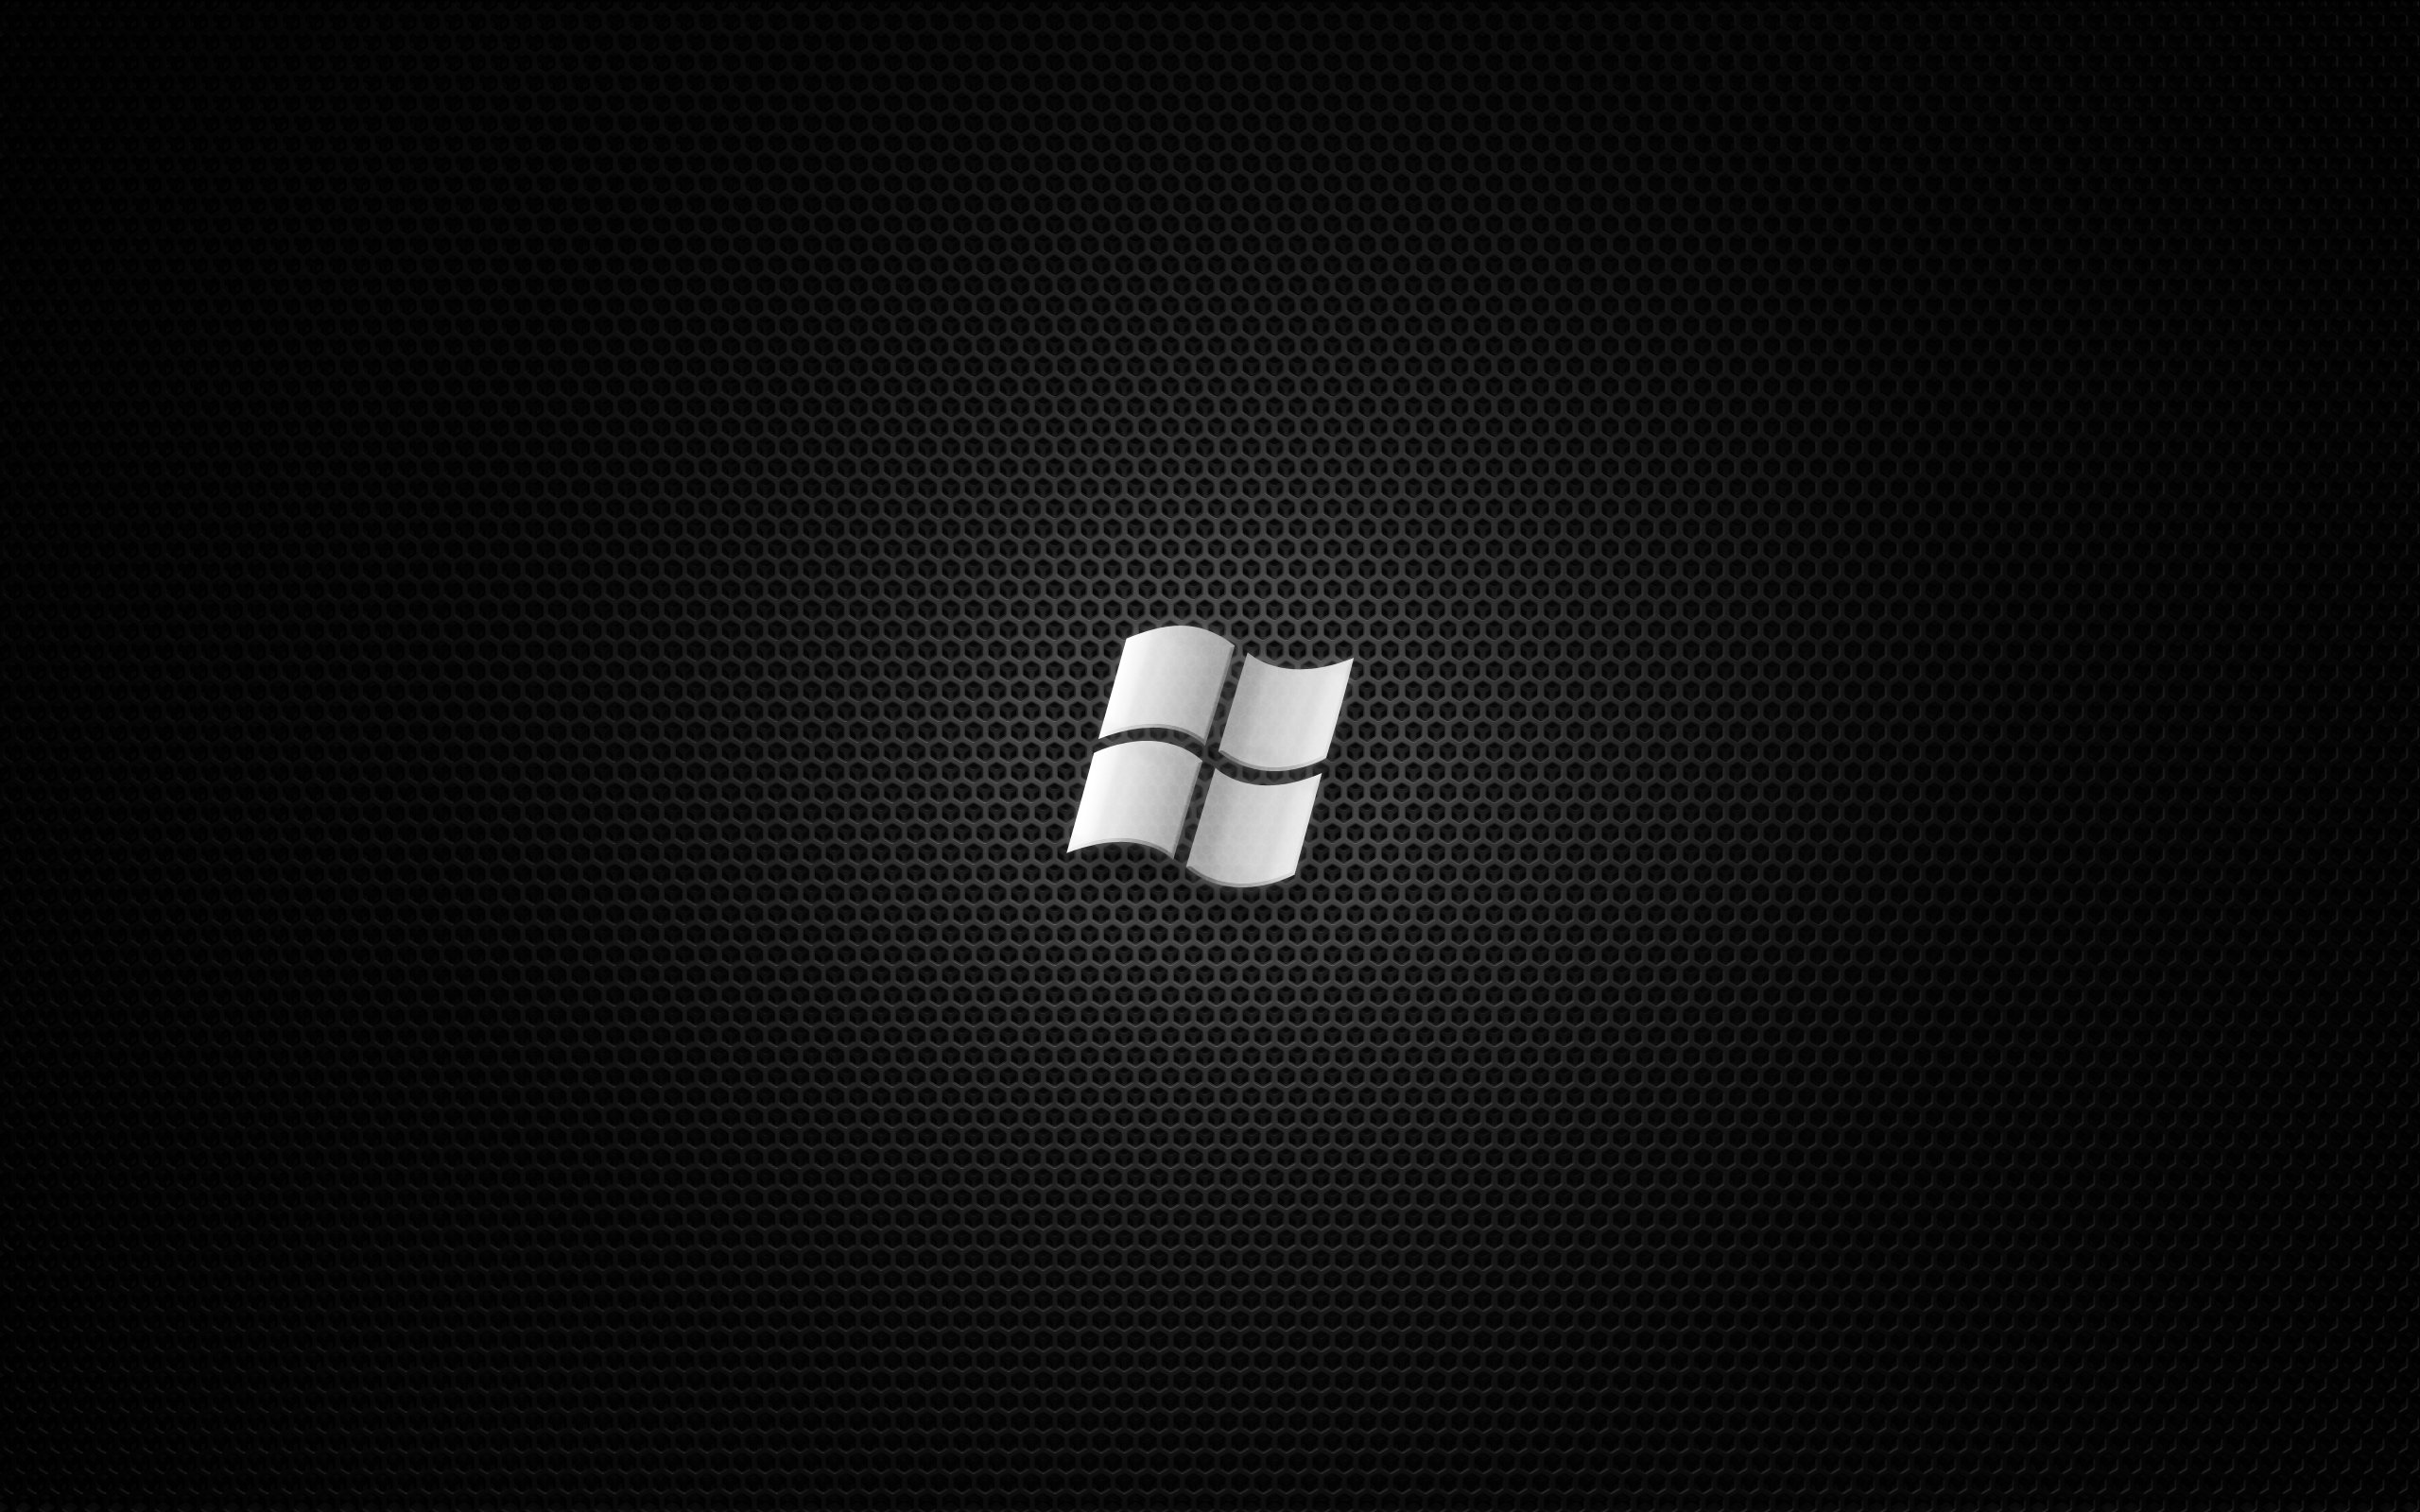 Windows 7 wallpapers HD for desktop backgrounds